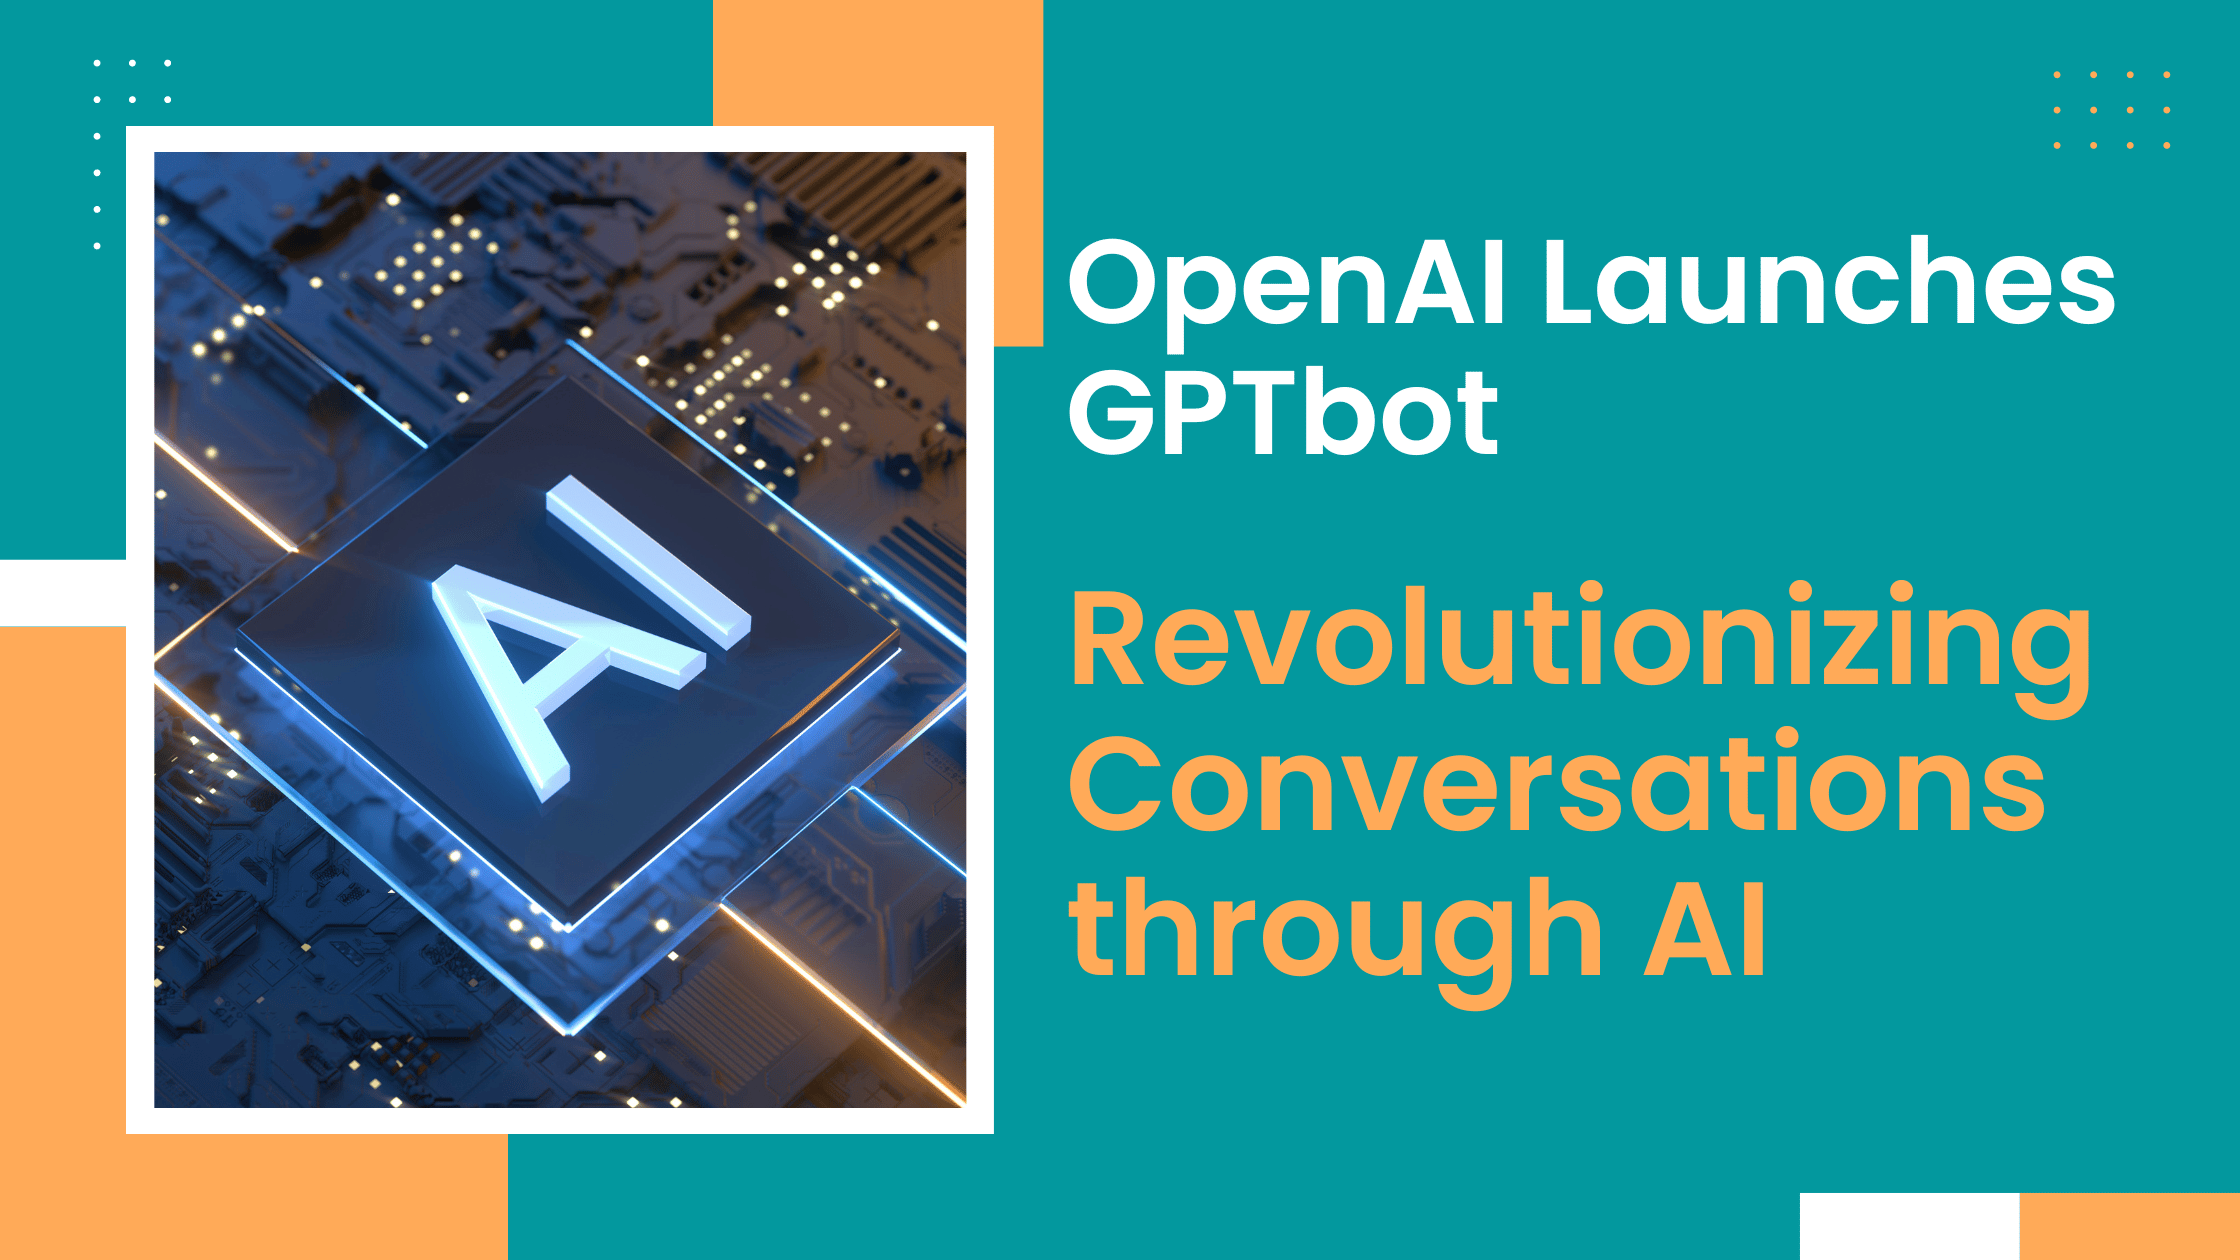 OpenAI Launches GPTbot: Revolutionizing Conversations through AI